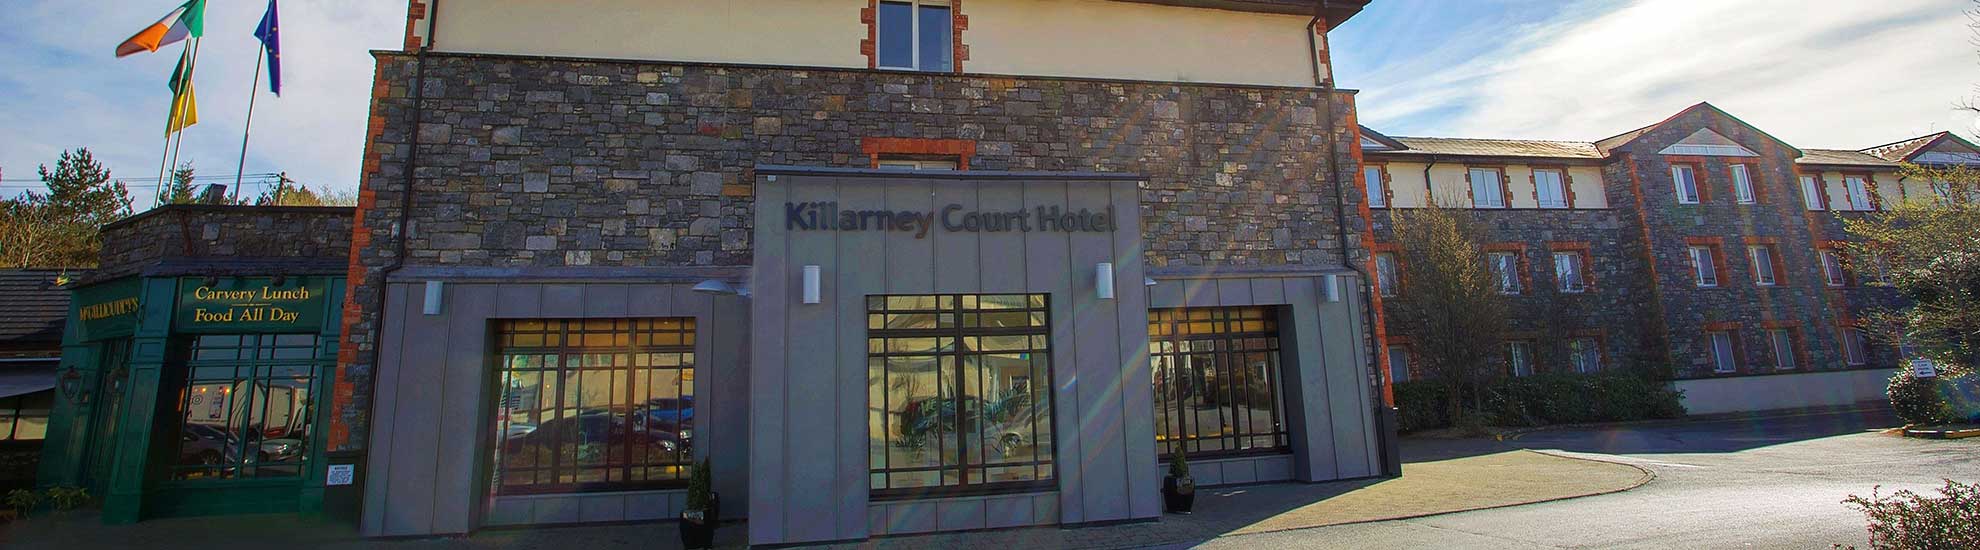 Killarney Court Hotel